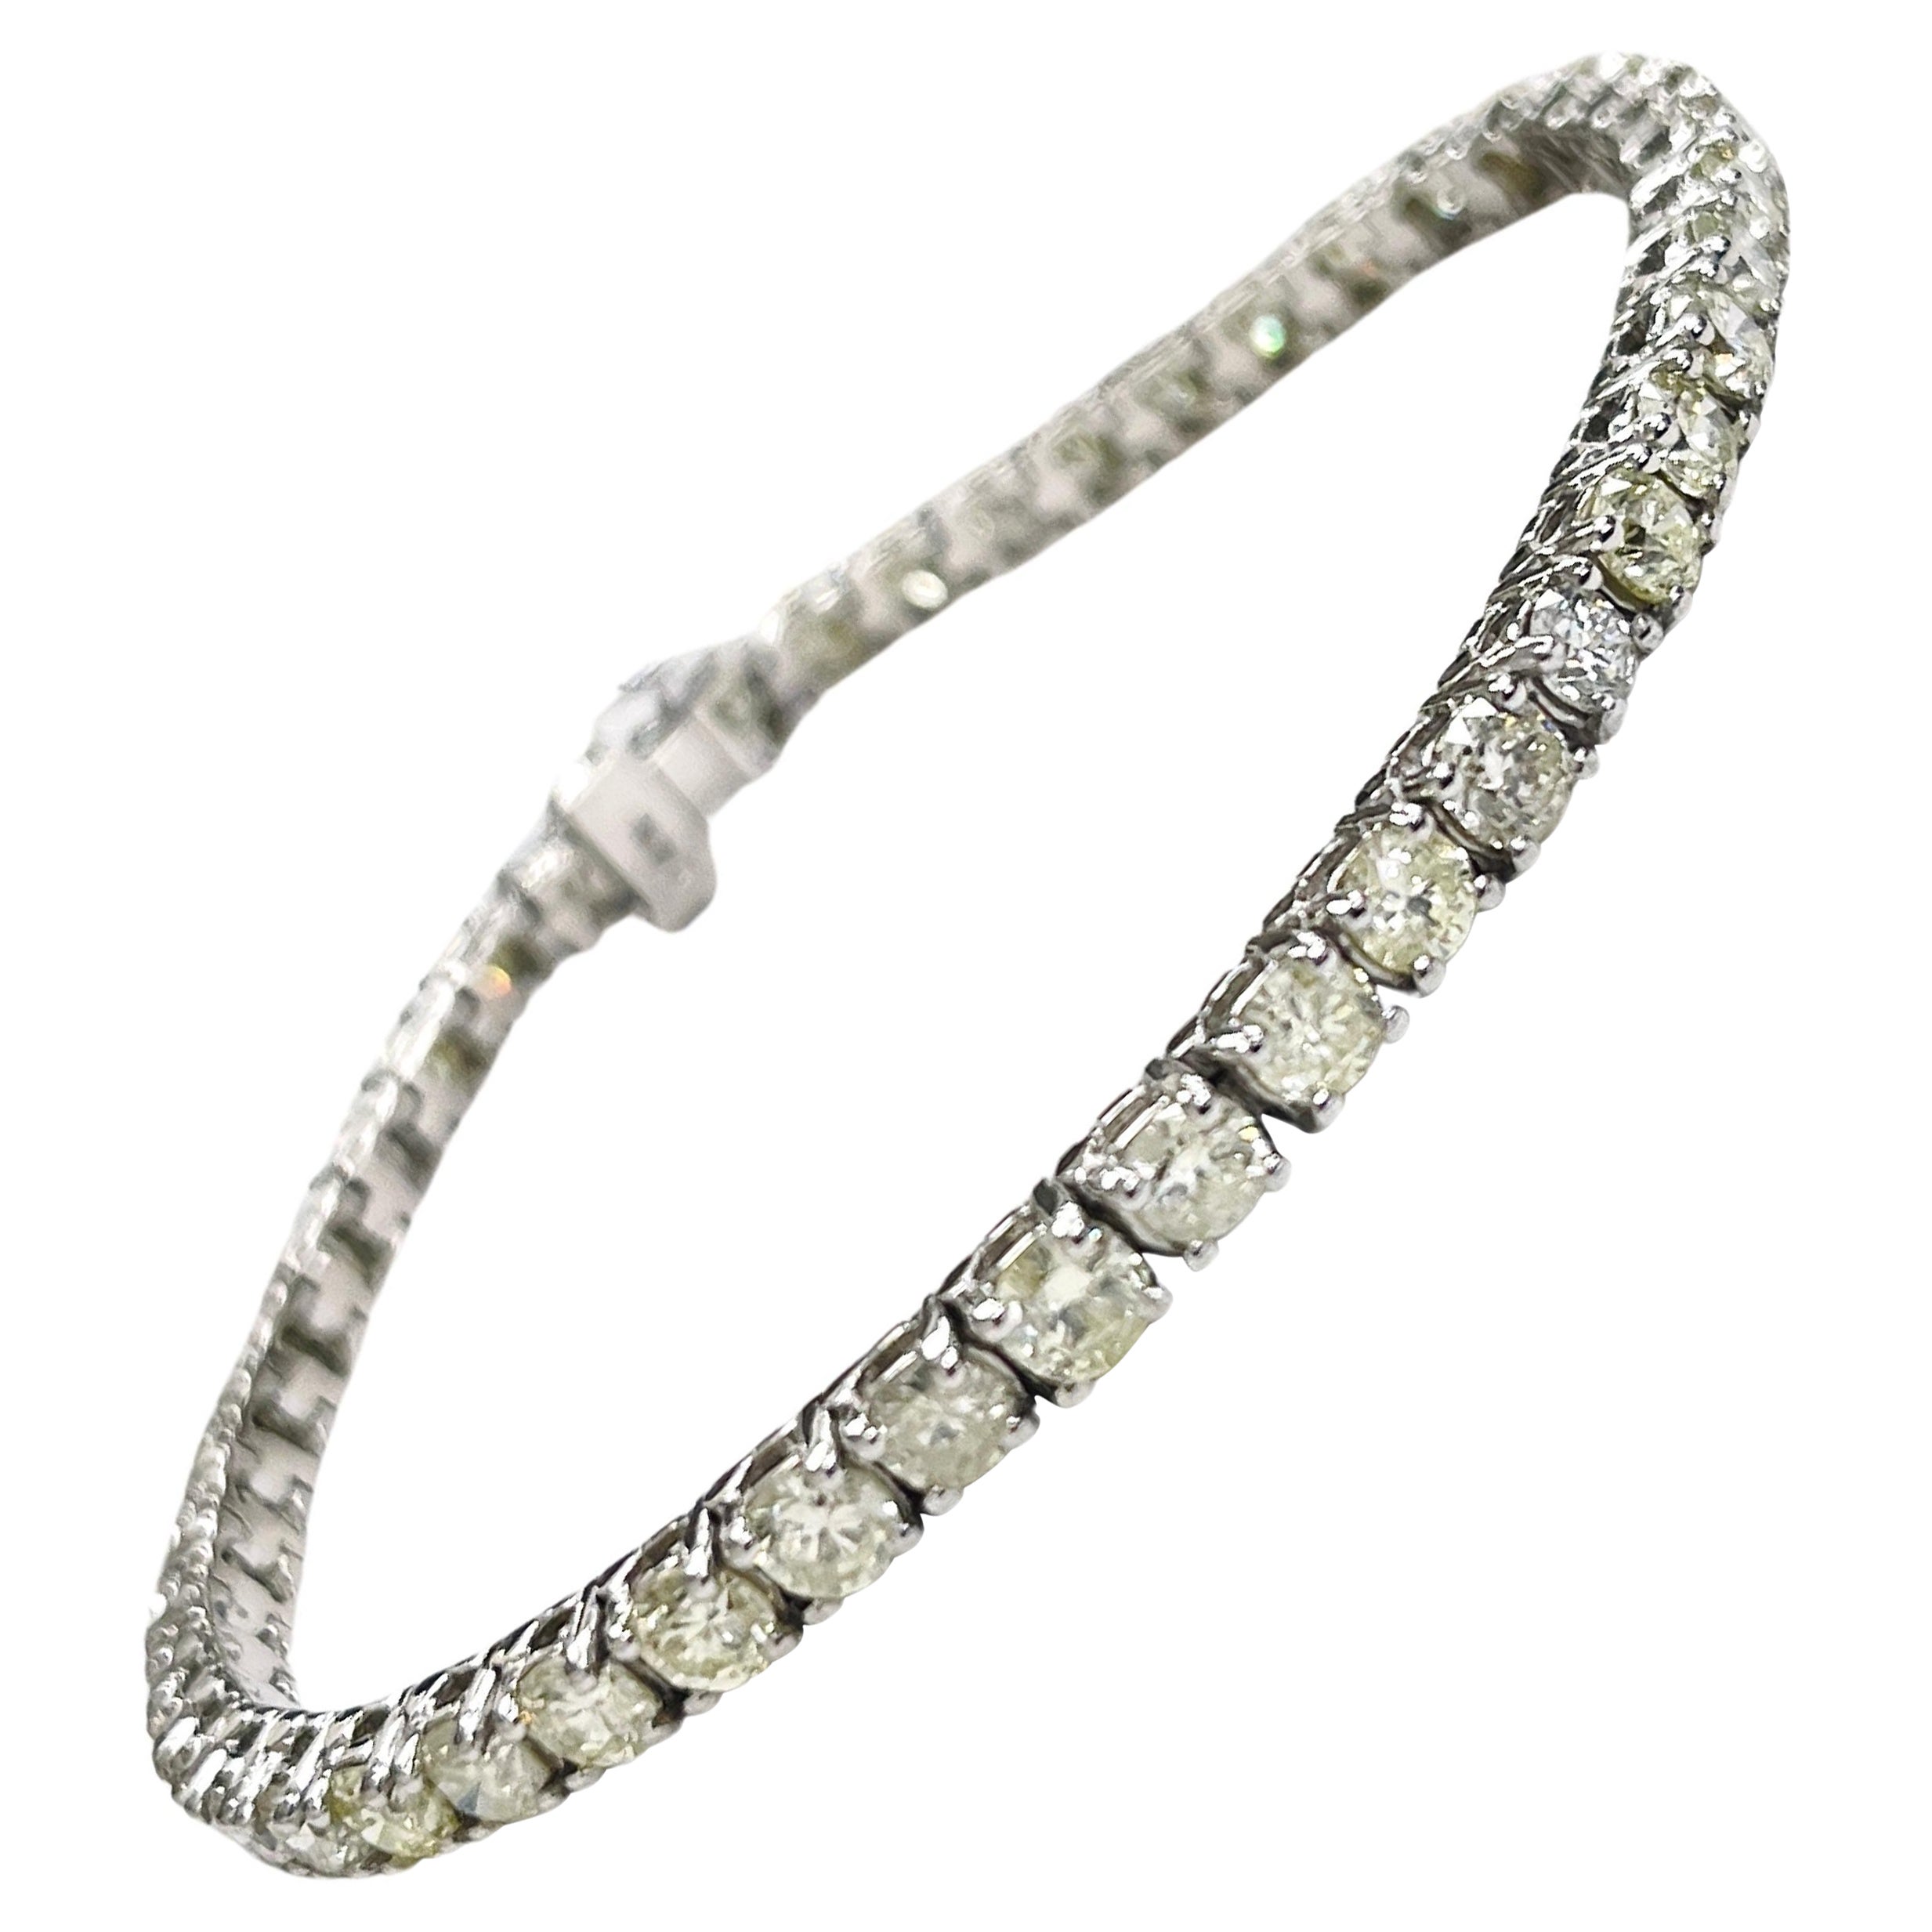 8.52 Carat Diamond Tennis Bracelet in 14K White Gold